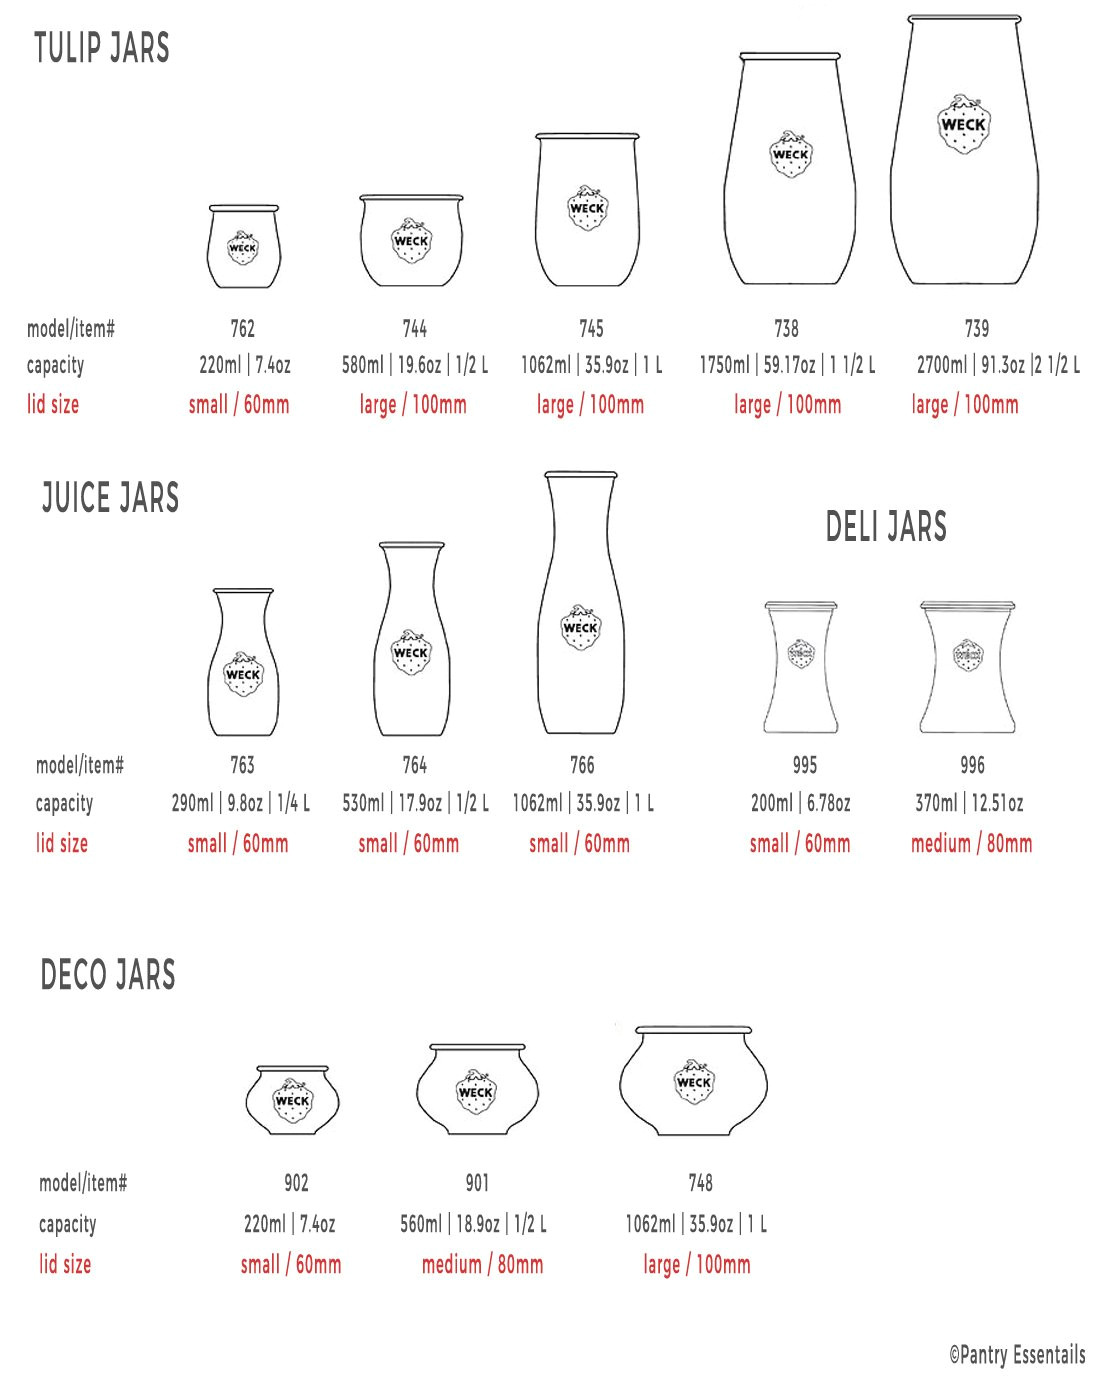 amazon com weck jar keep fresh plastic lids 6 pack large 100mm fits models 740 741 742 743 738 739 744 745 748 974 kitchen dining